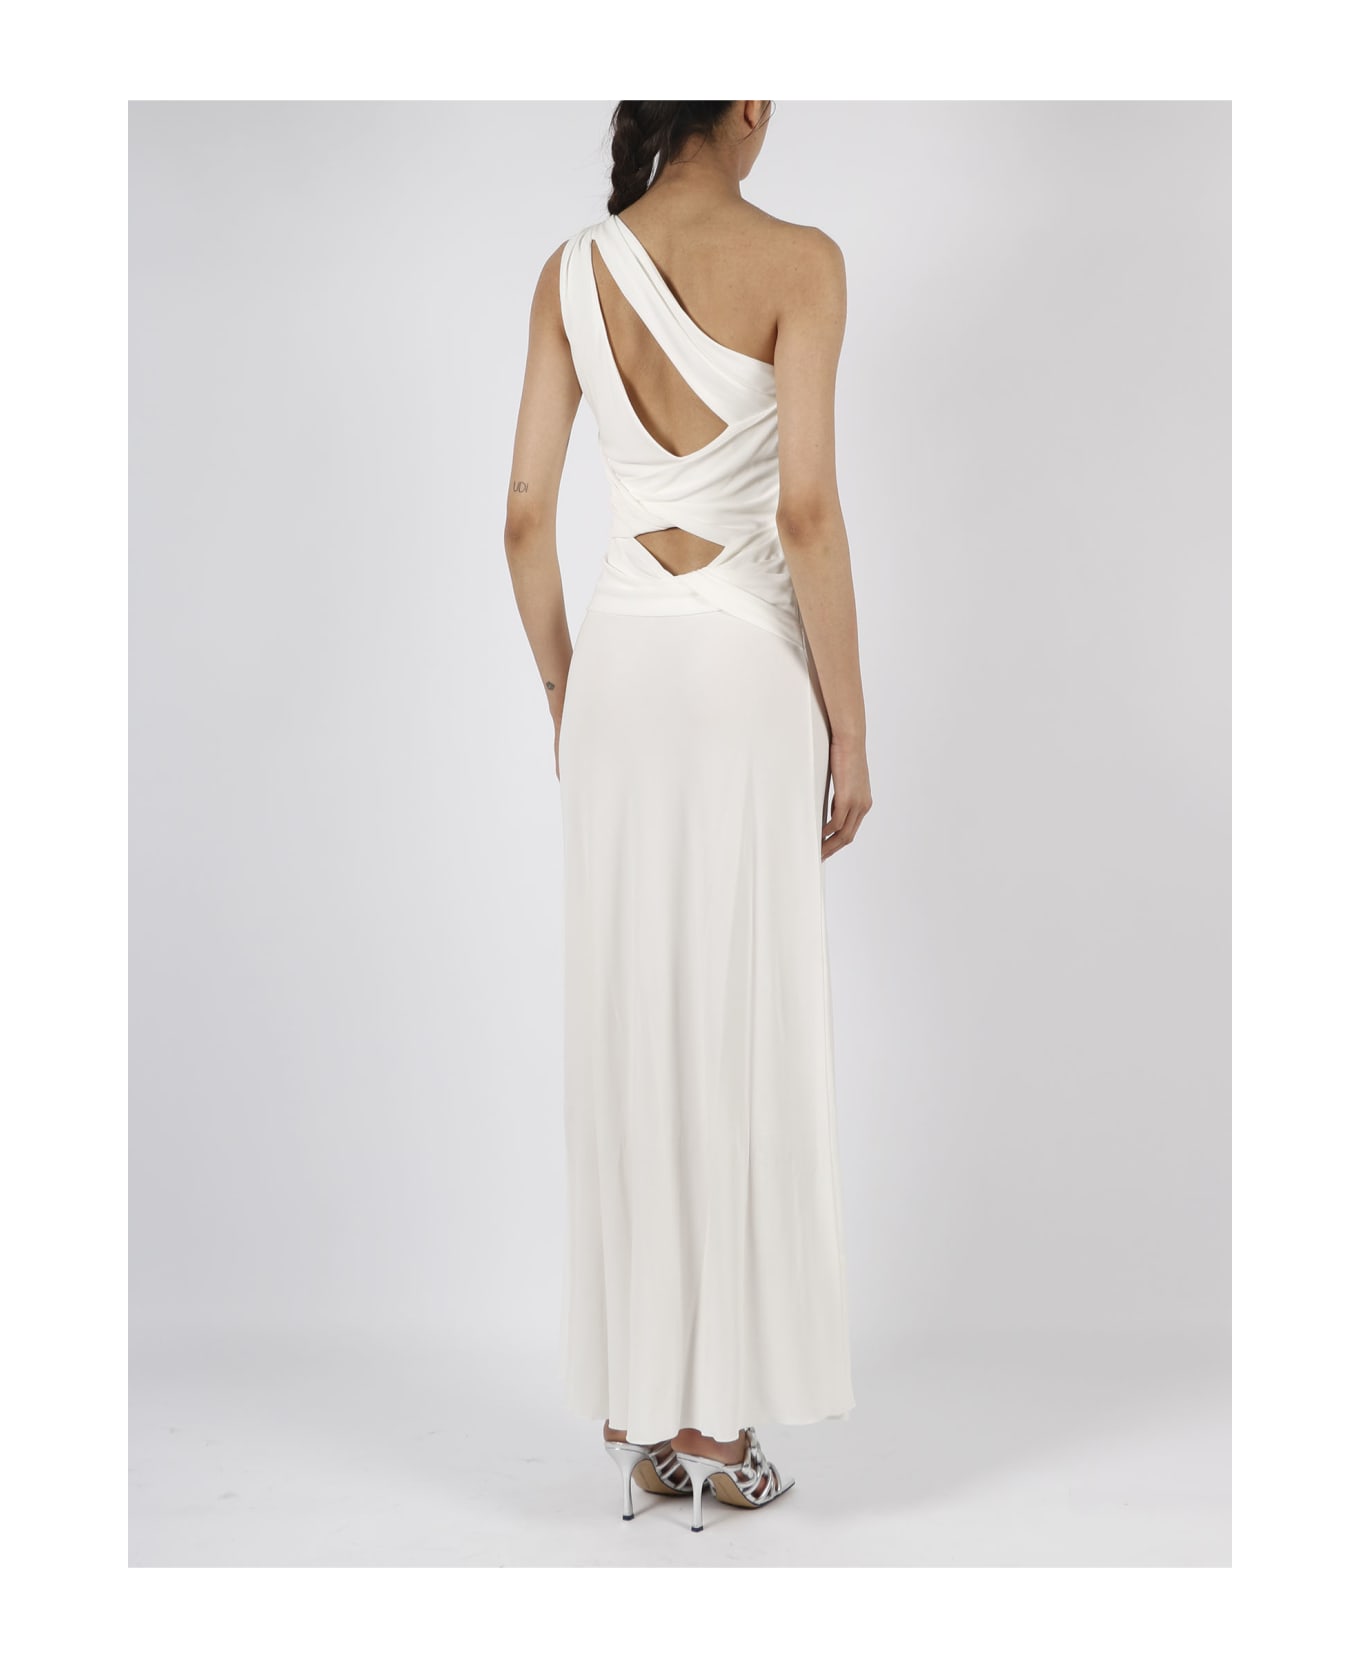 Alberta Ferretti One Shoulder Long Dress - White